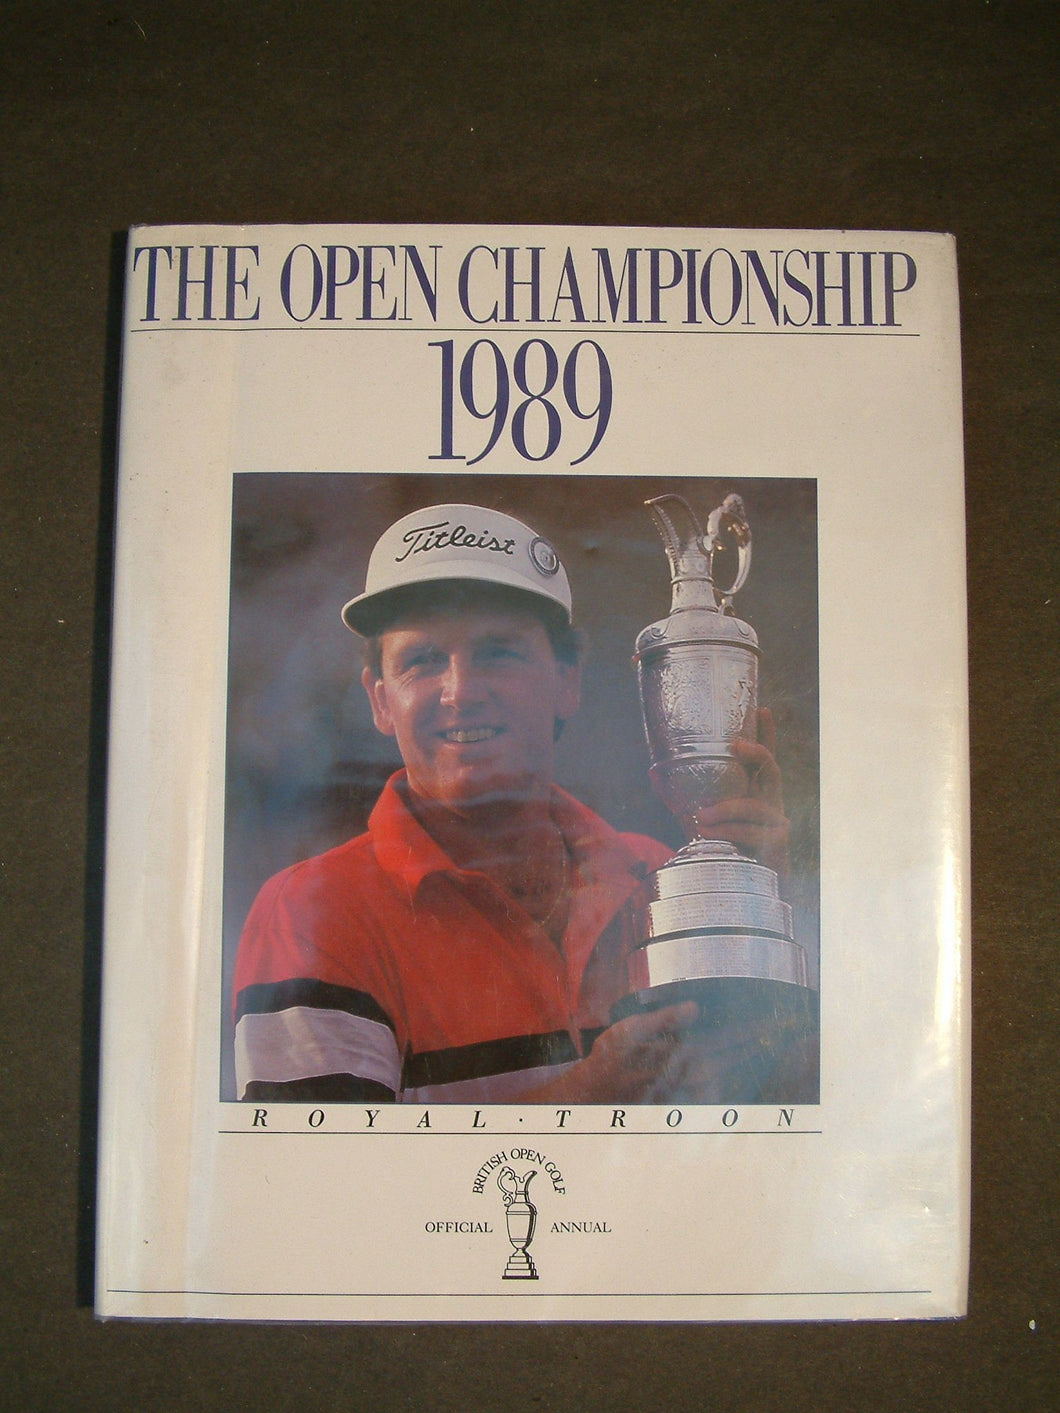 The Open Championship 1989 John Hopkins and Bev Norwood